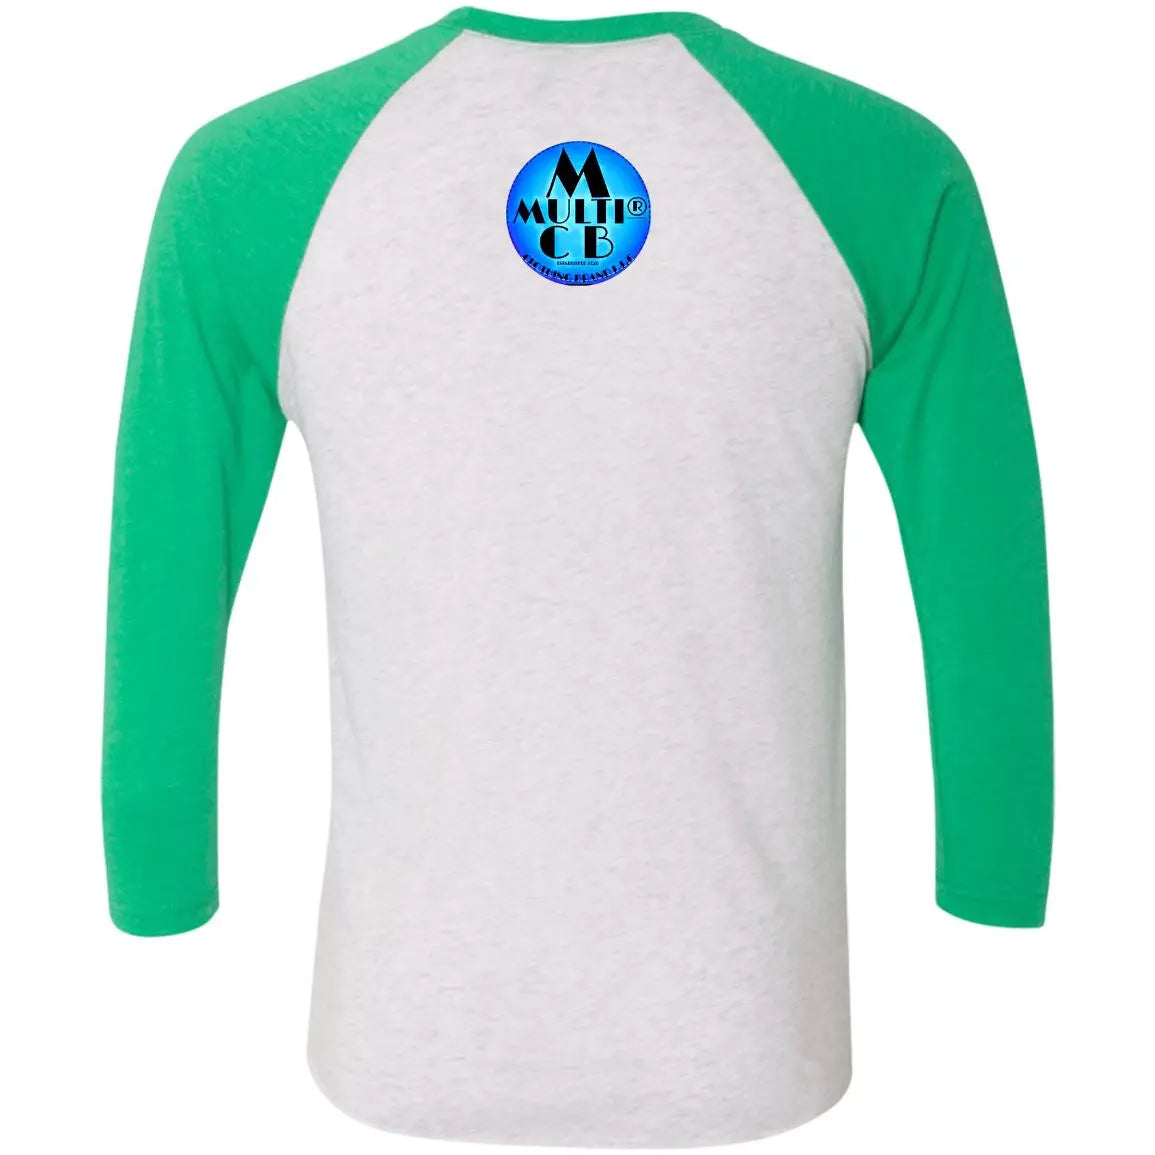 Be Your Own Motivation - Men's Tri-Blend 3/4 Sleeve Raglan T-Shirt CustomCat